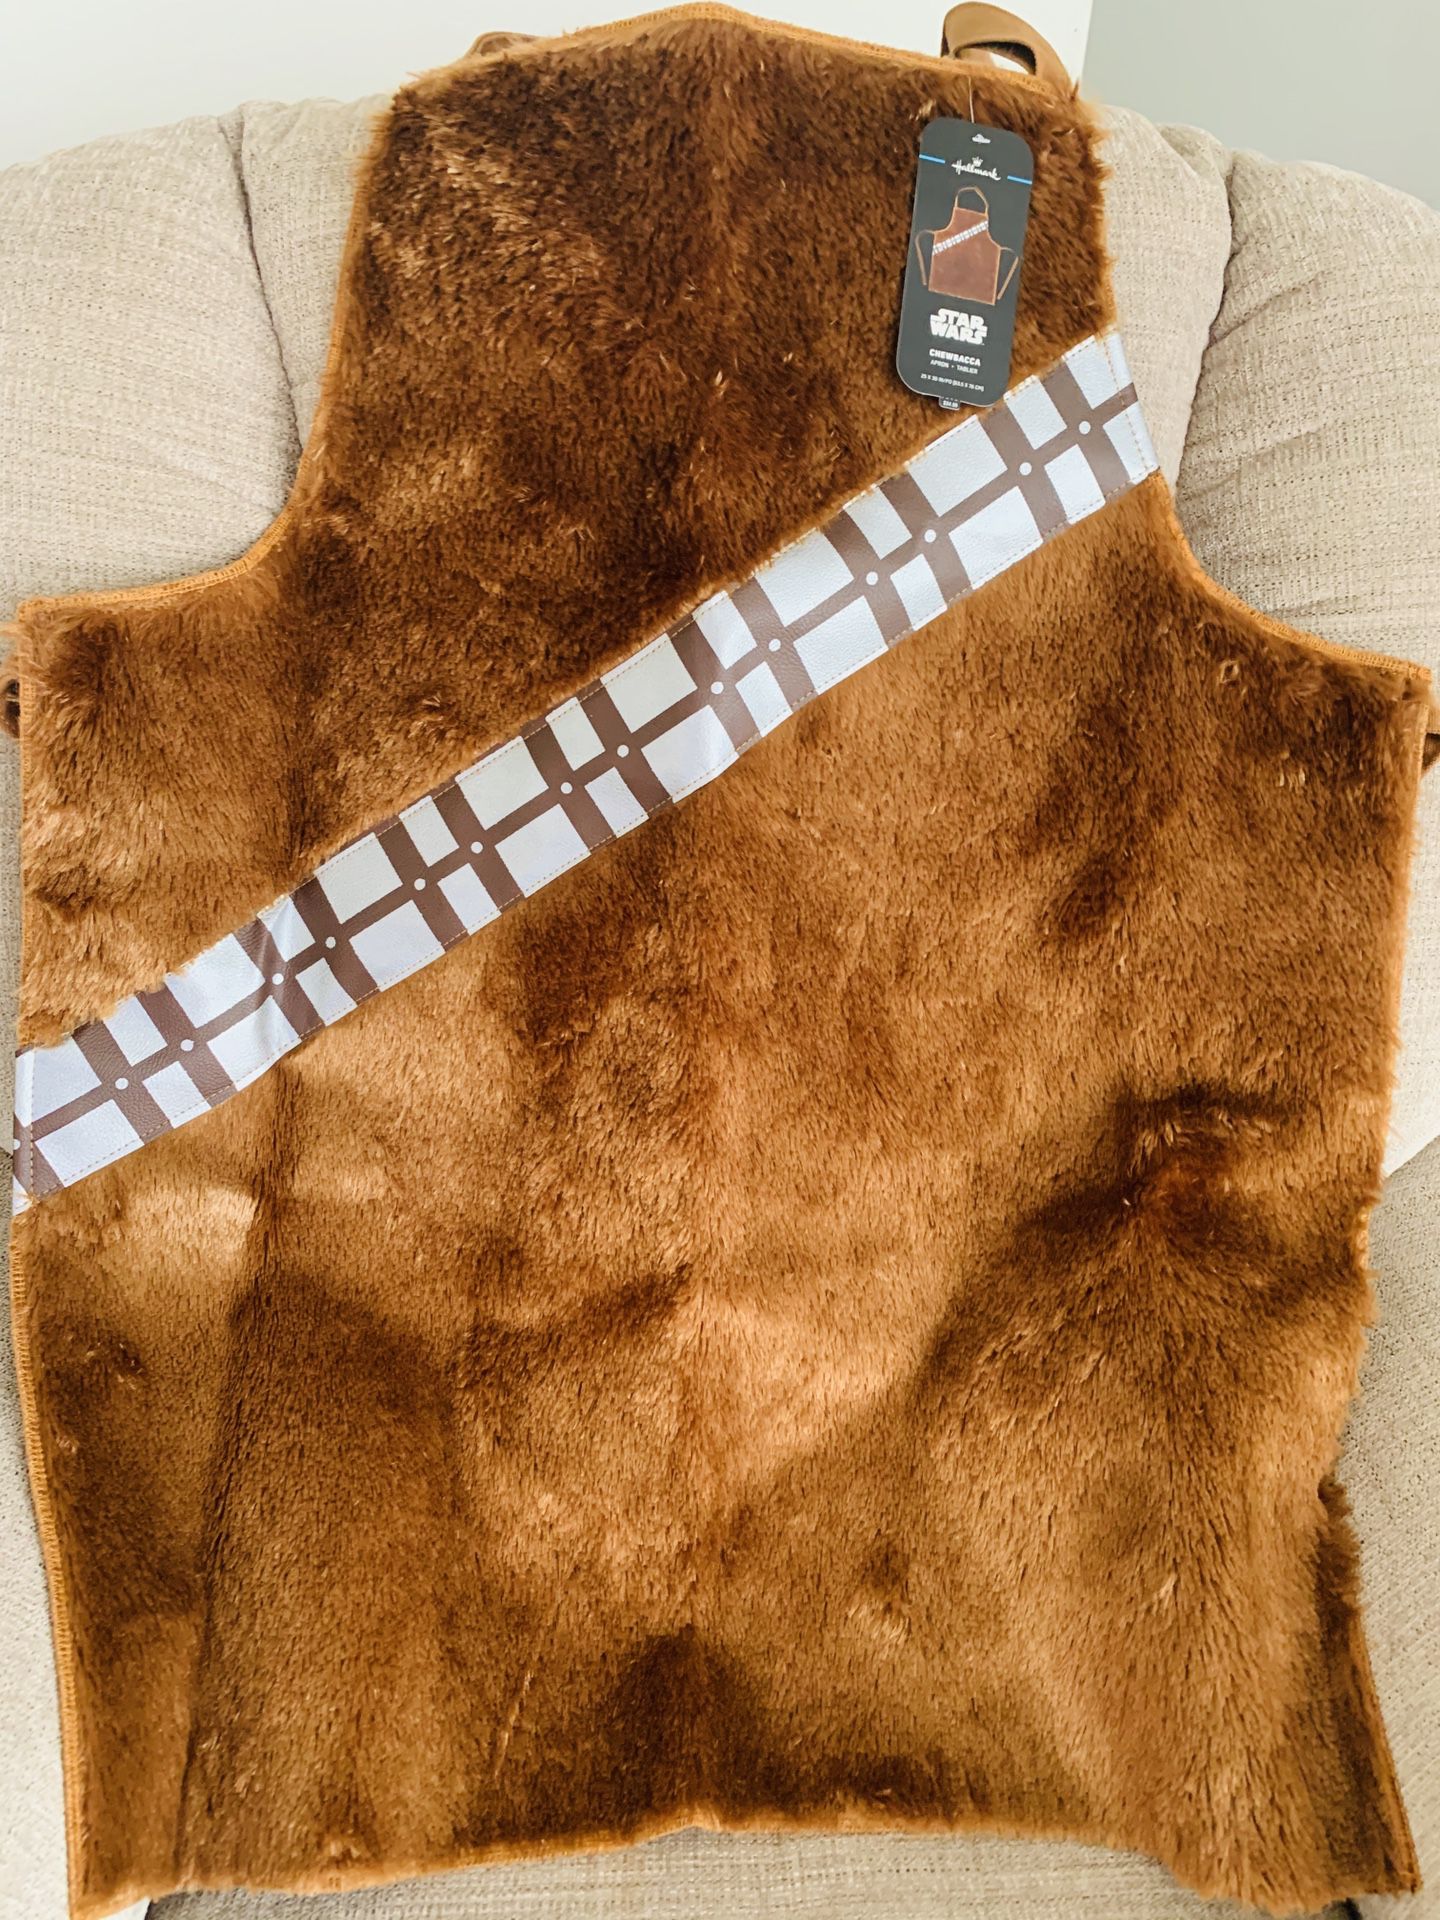 Disney Chewbacca Star Wars Apron